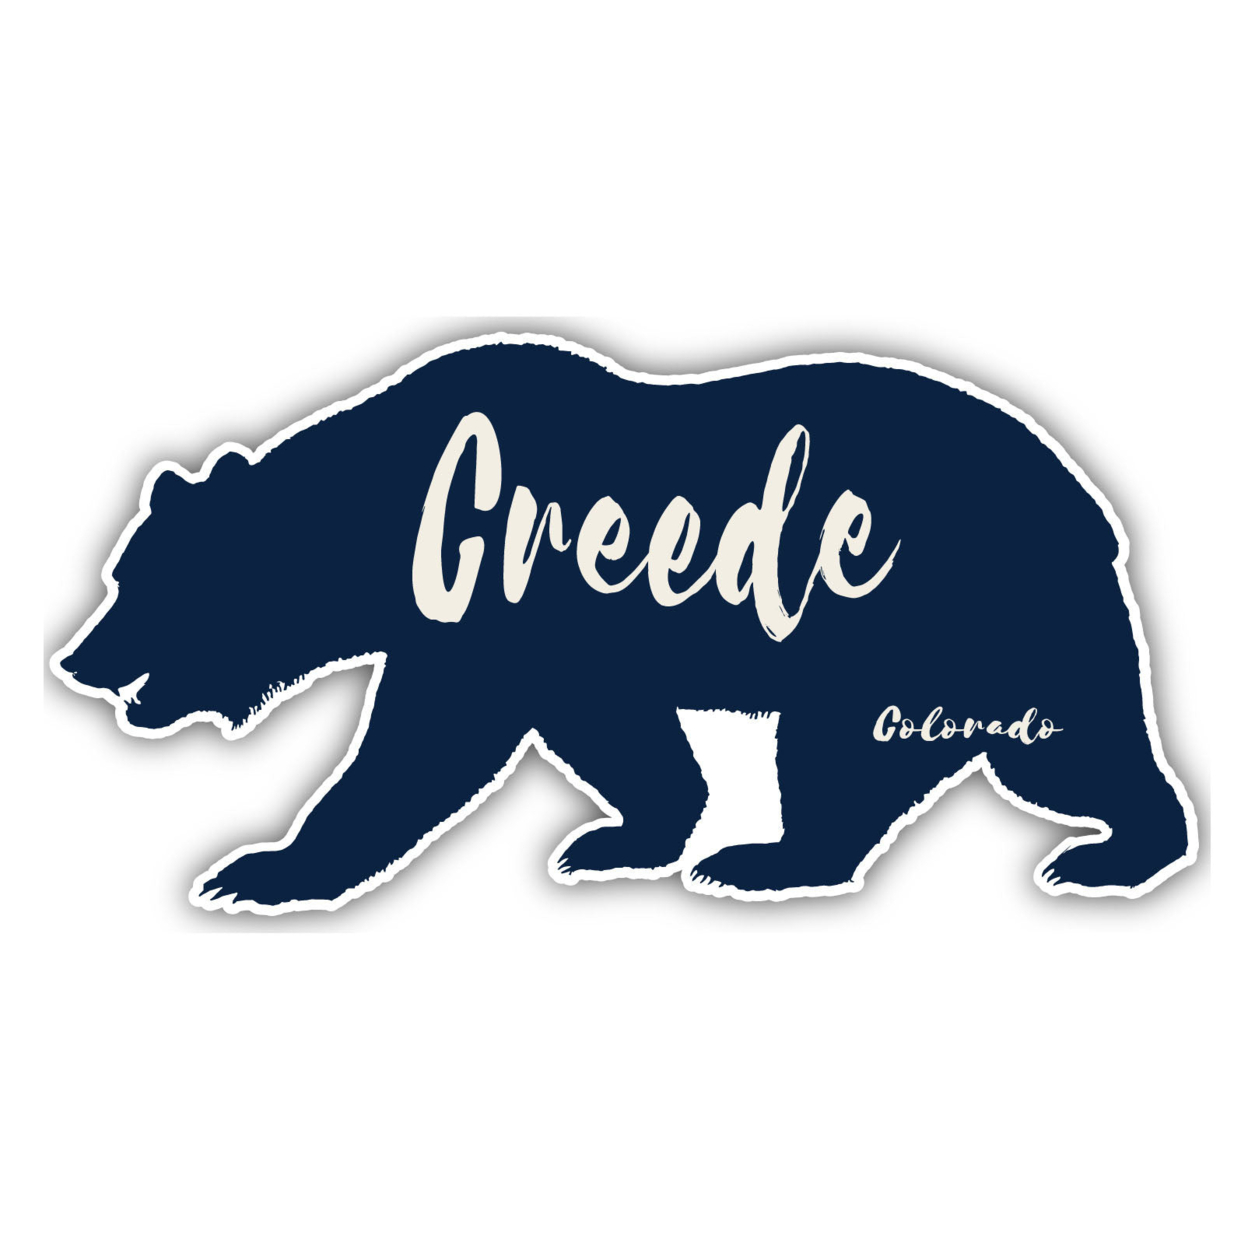 Creede Colorado Souvenir Decorative Stickers (Choose Theme And Size) - Single Unit, 6-Inch, Camp Life